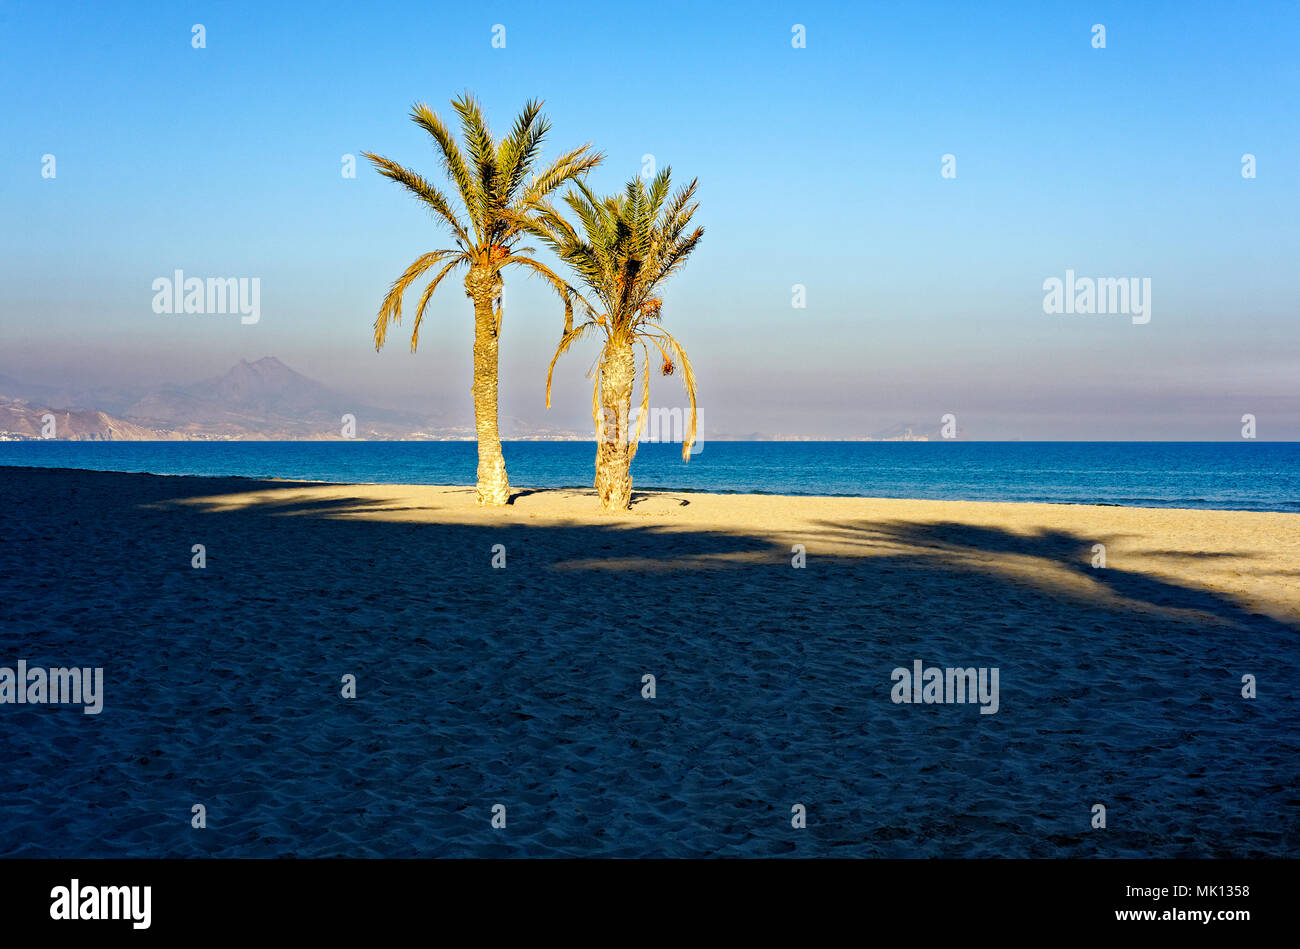 palm trees on the beach Stock Photo